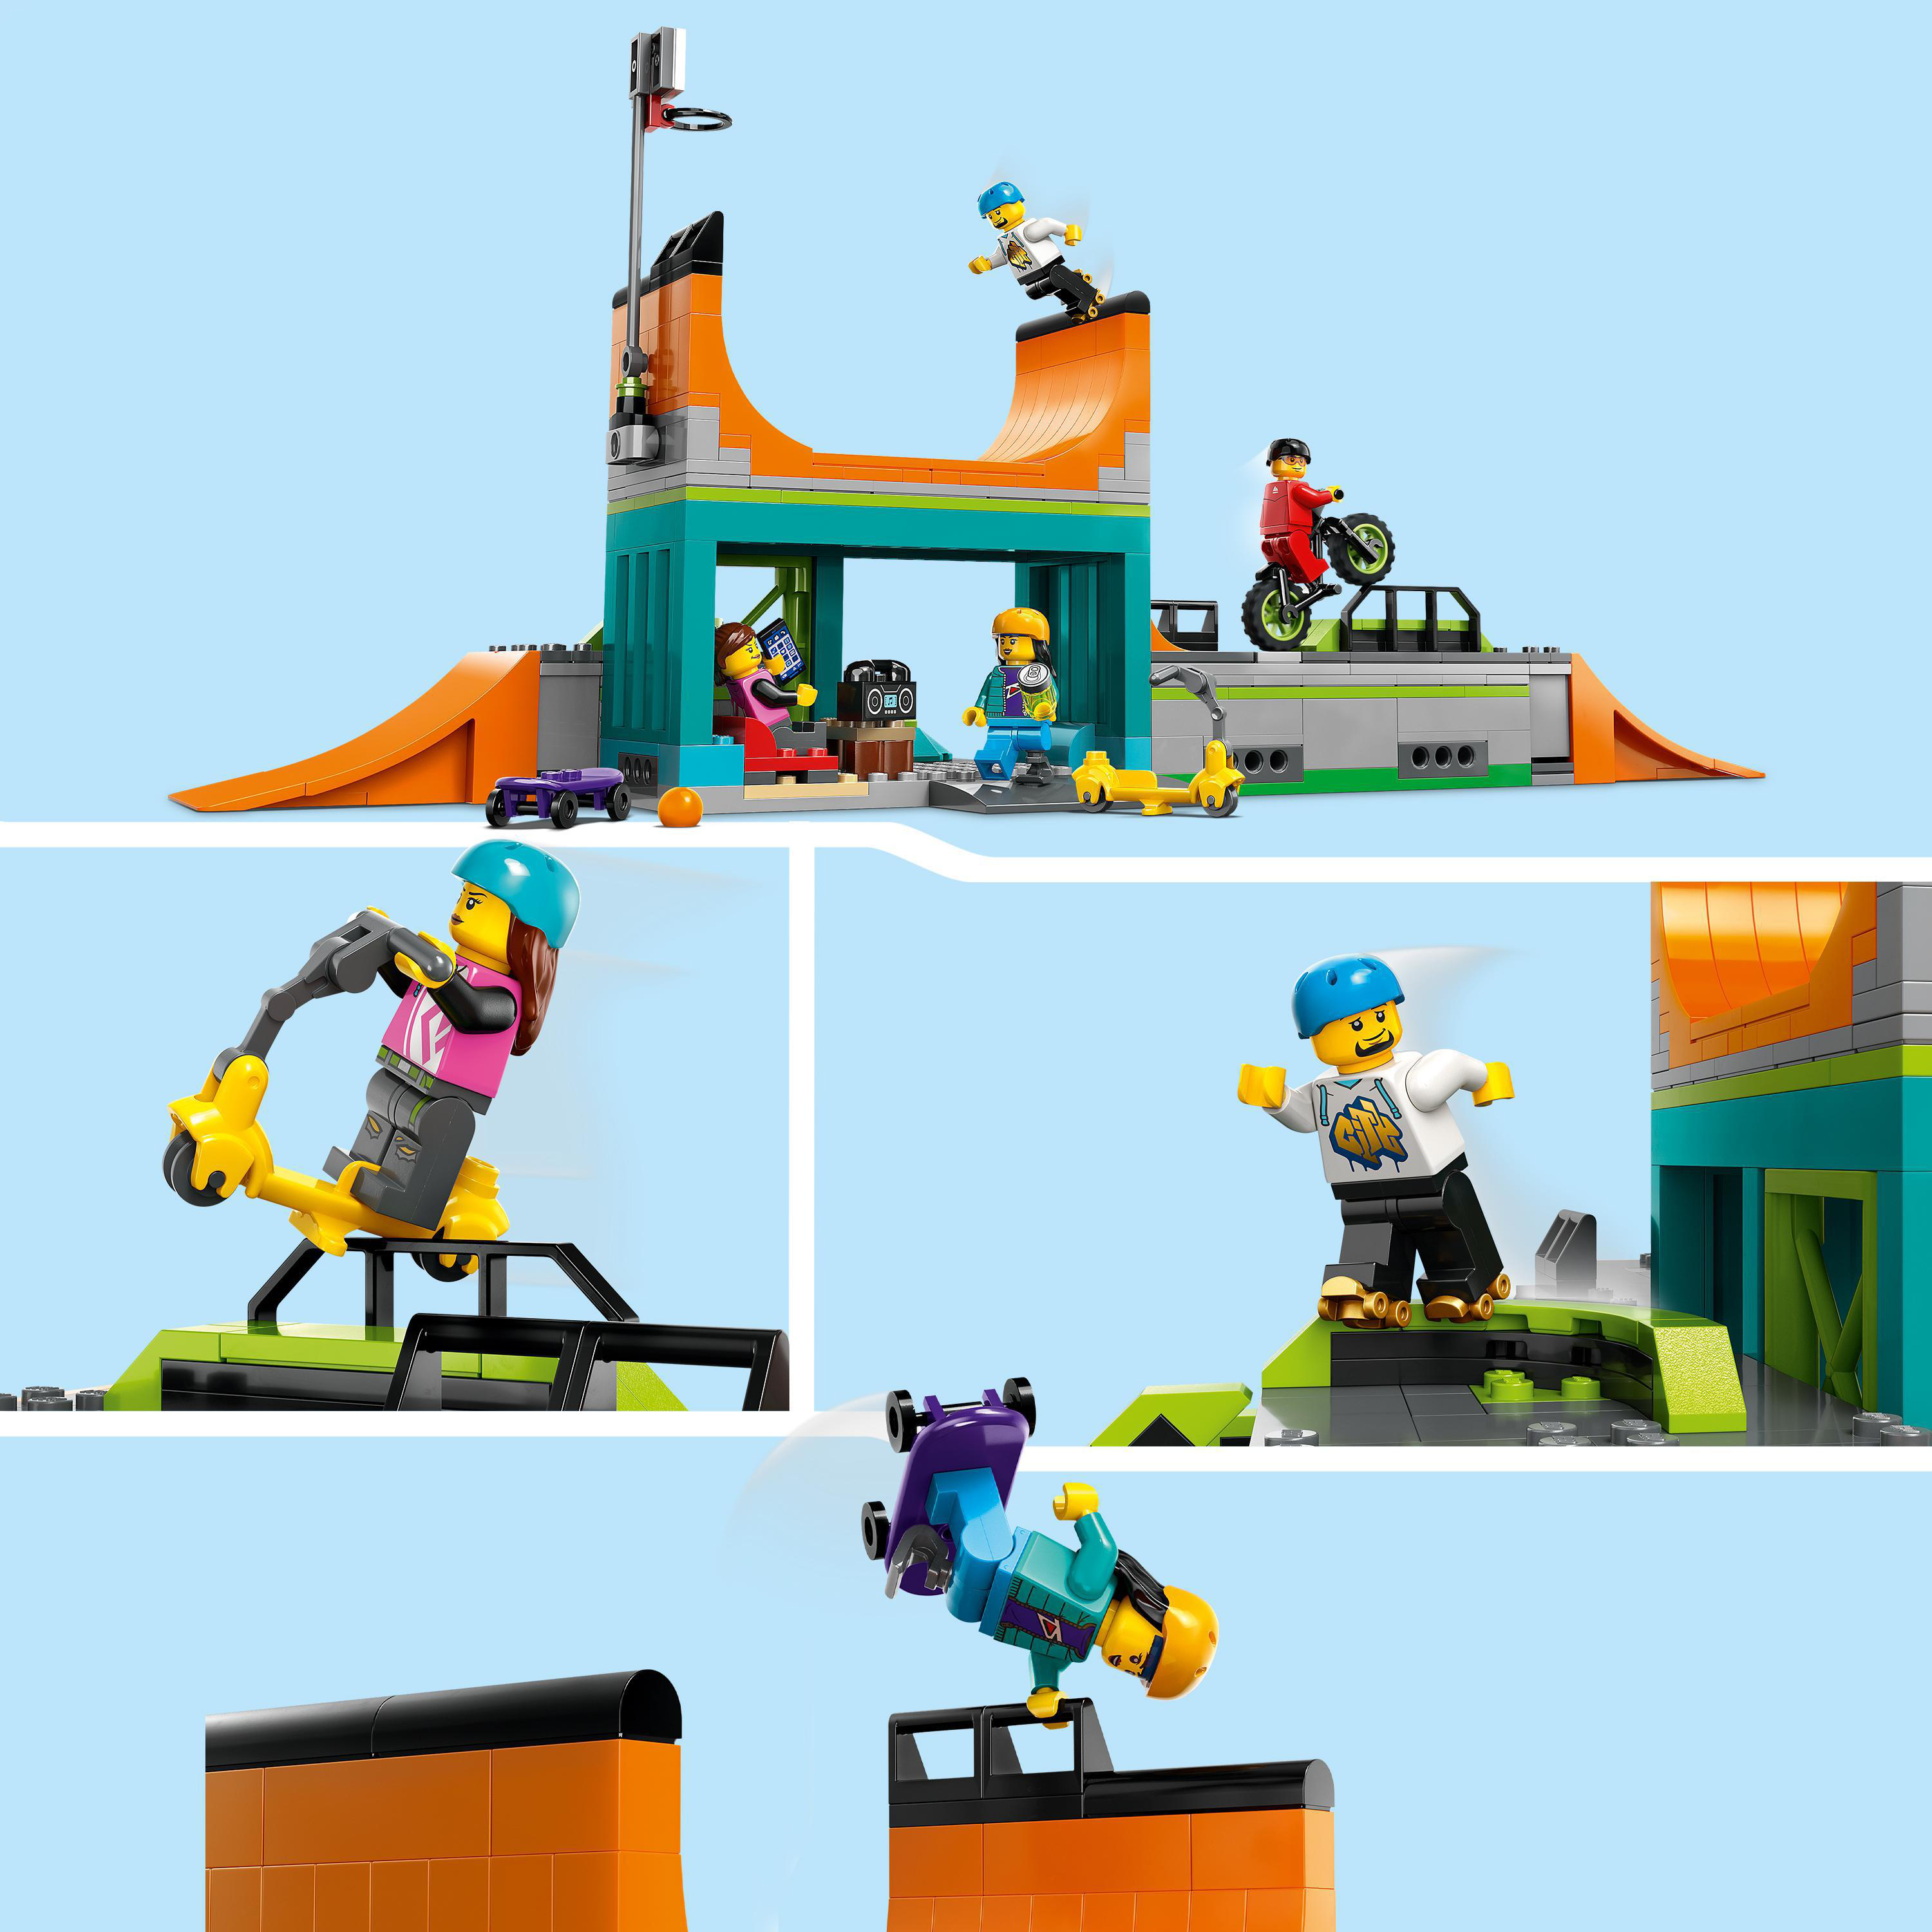 LEGO City 60364 Skaterpark Bausatz, Mehrfarbig